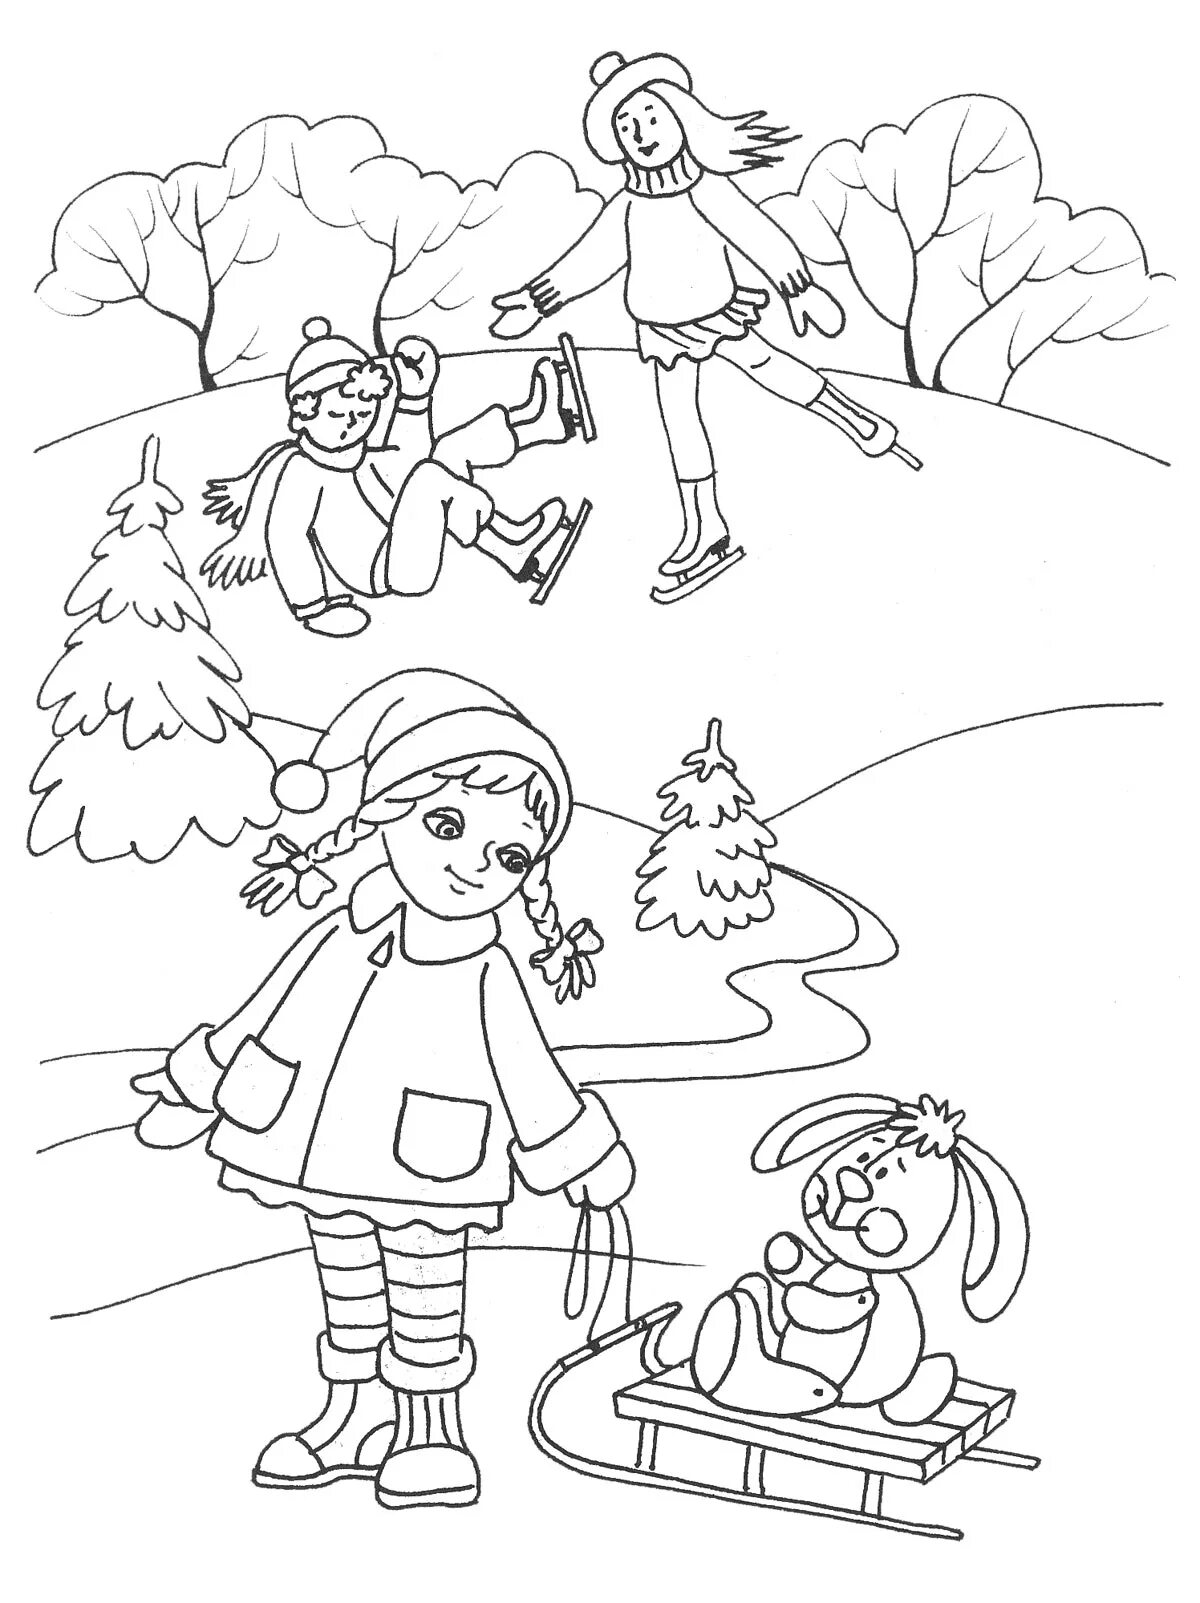 Children's fun in winter #5